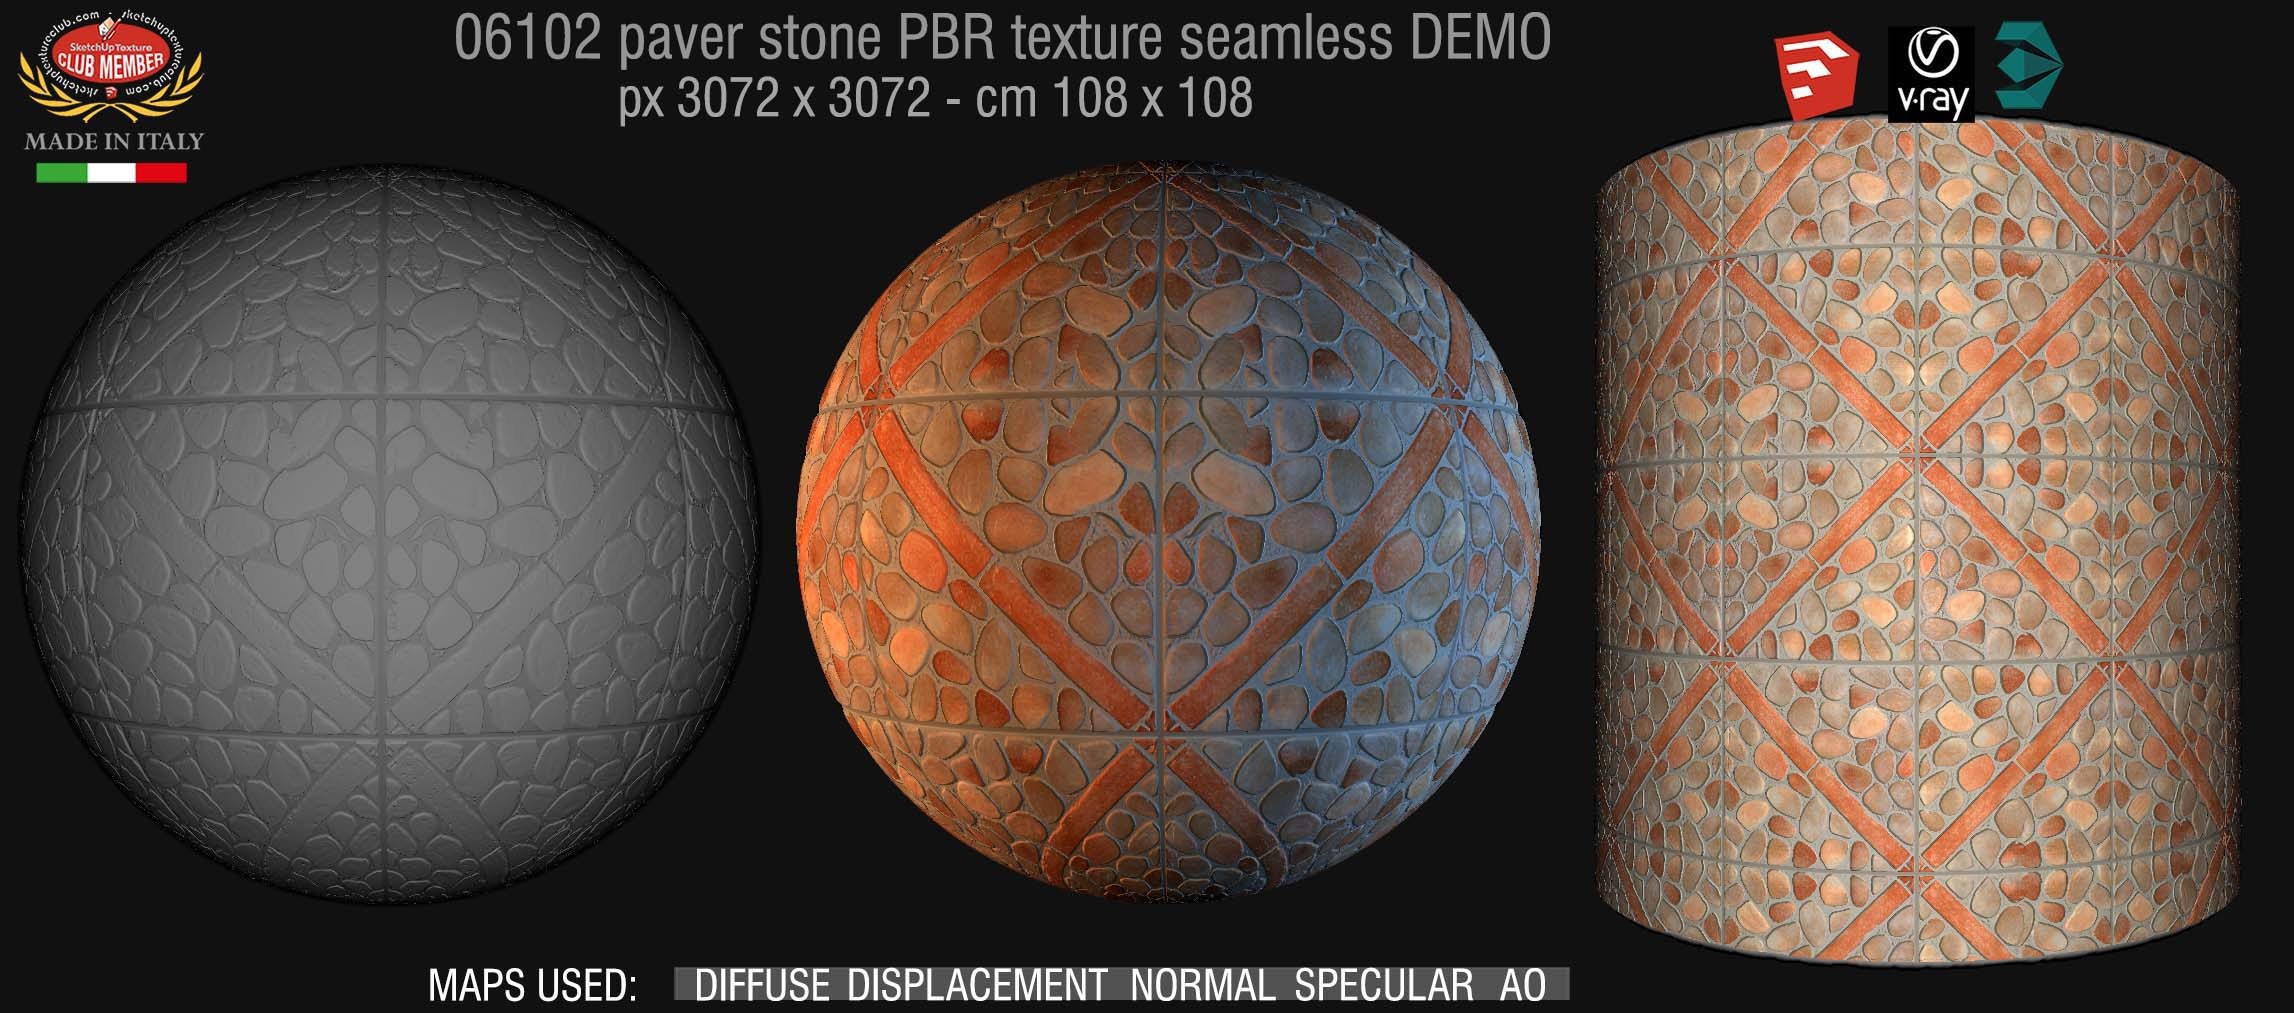 06102 paver stone PBR texture seamless DEMO